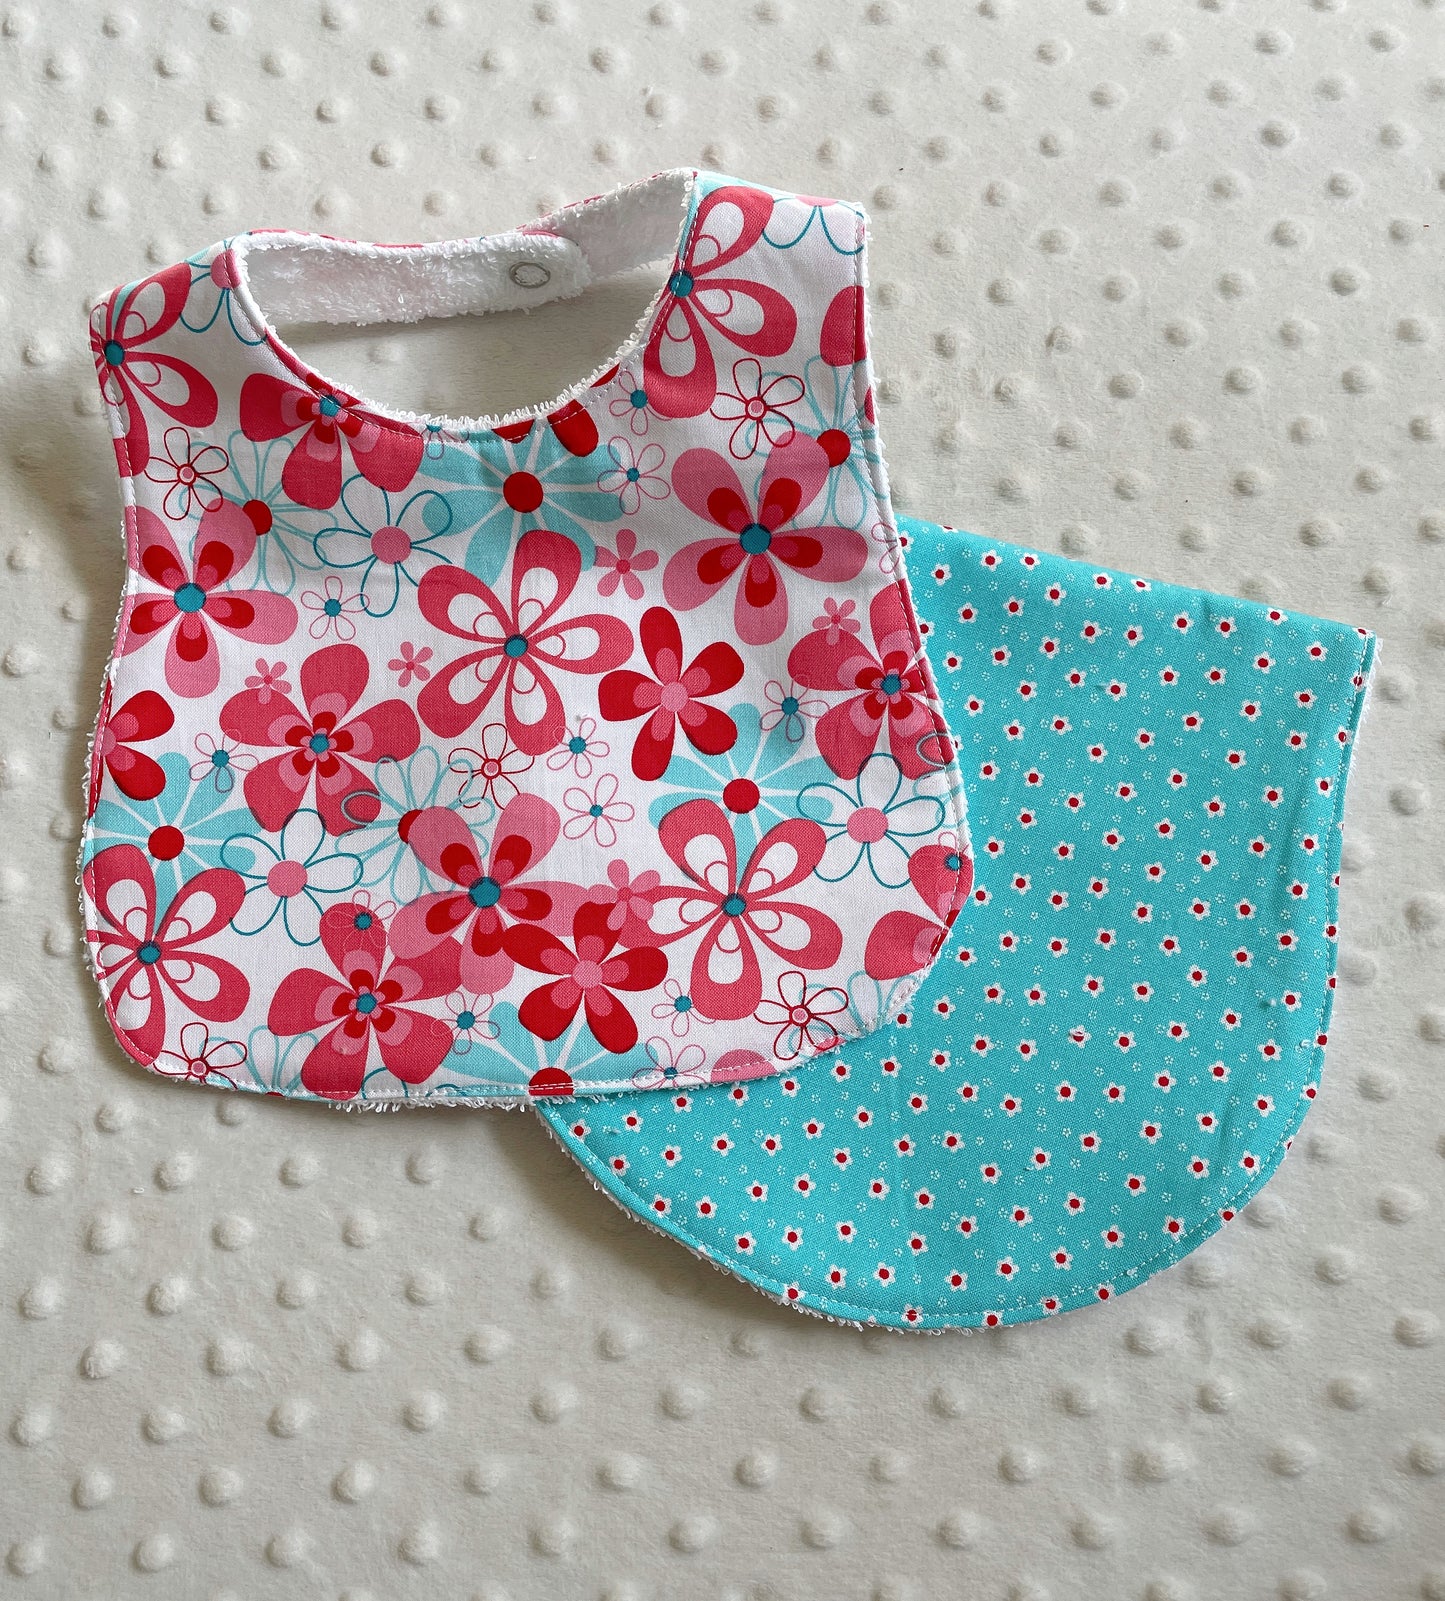 Baby Girl Bib and Burp Cloth Gift Set in Aqua Red Retro Florals - Handmade Baby Shower Gift